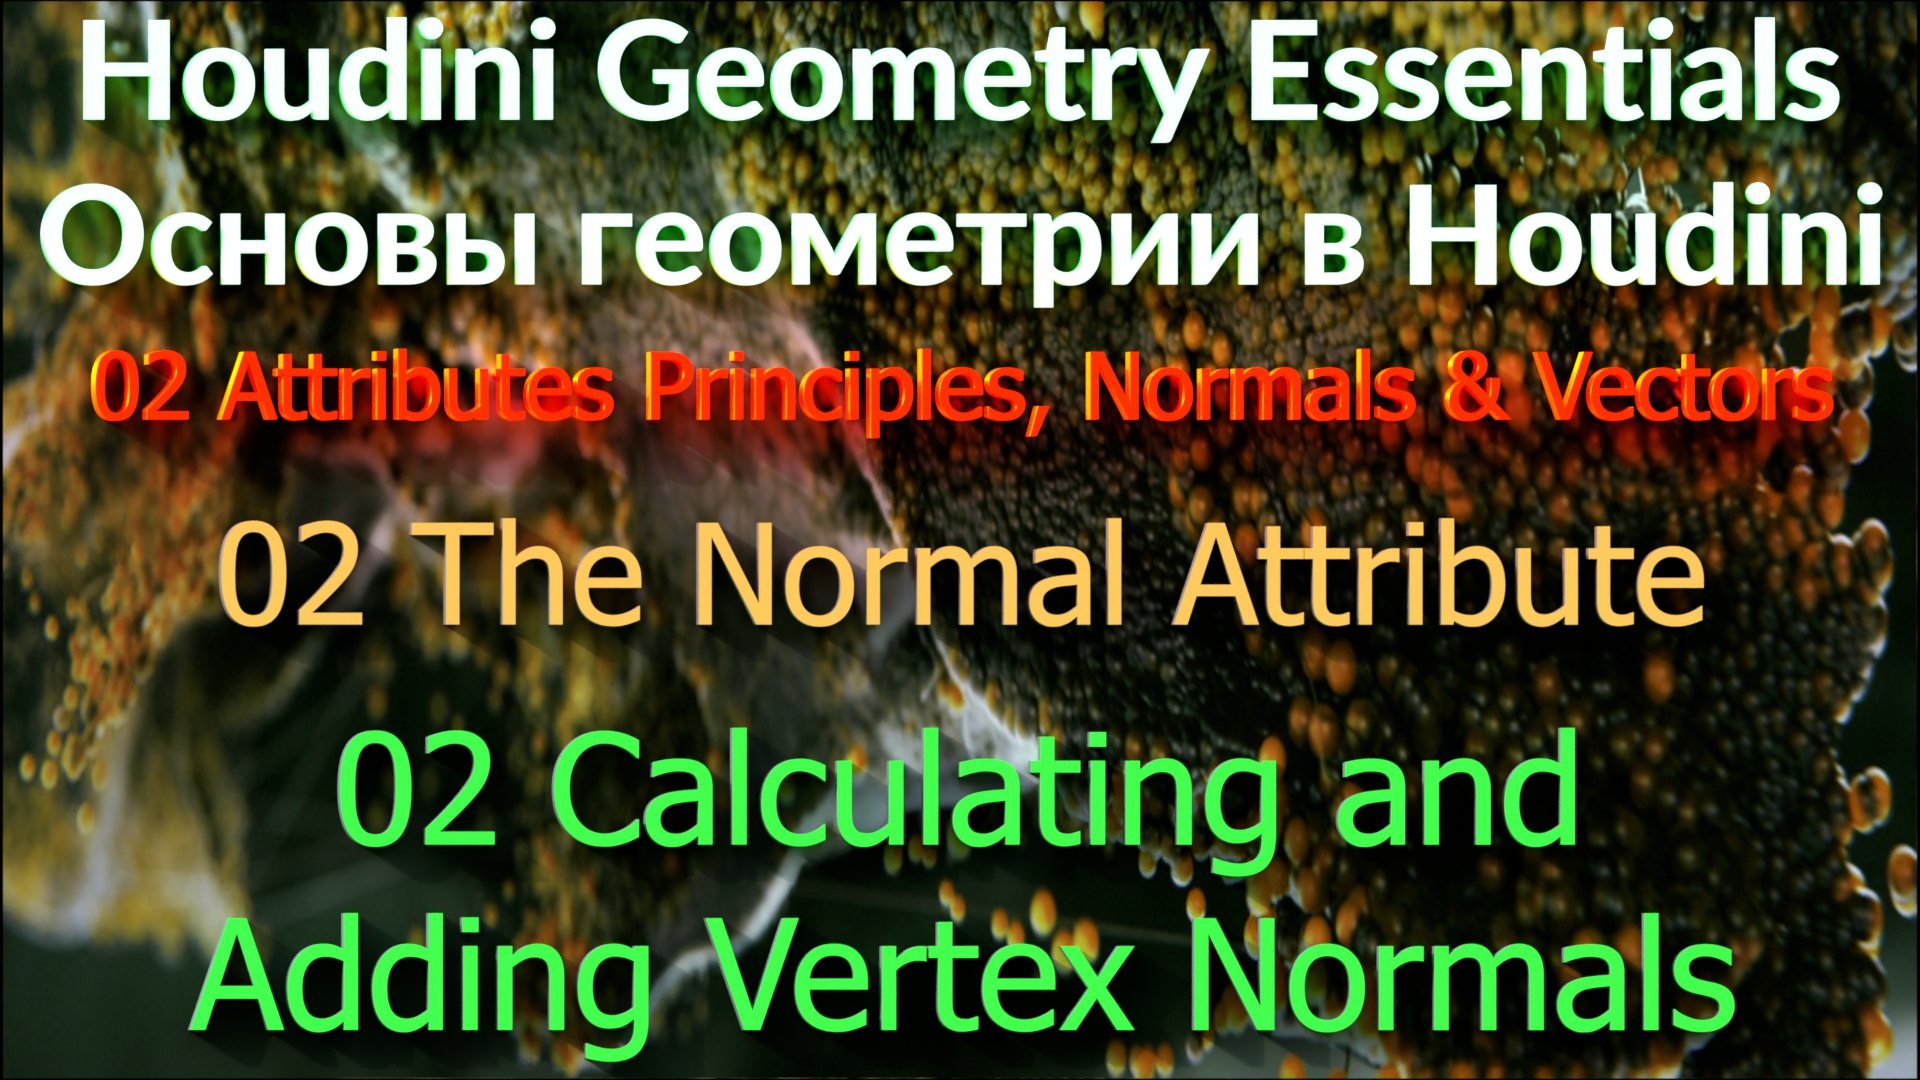 02_02_02 Calculating and Adding Vertex Normals